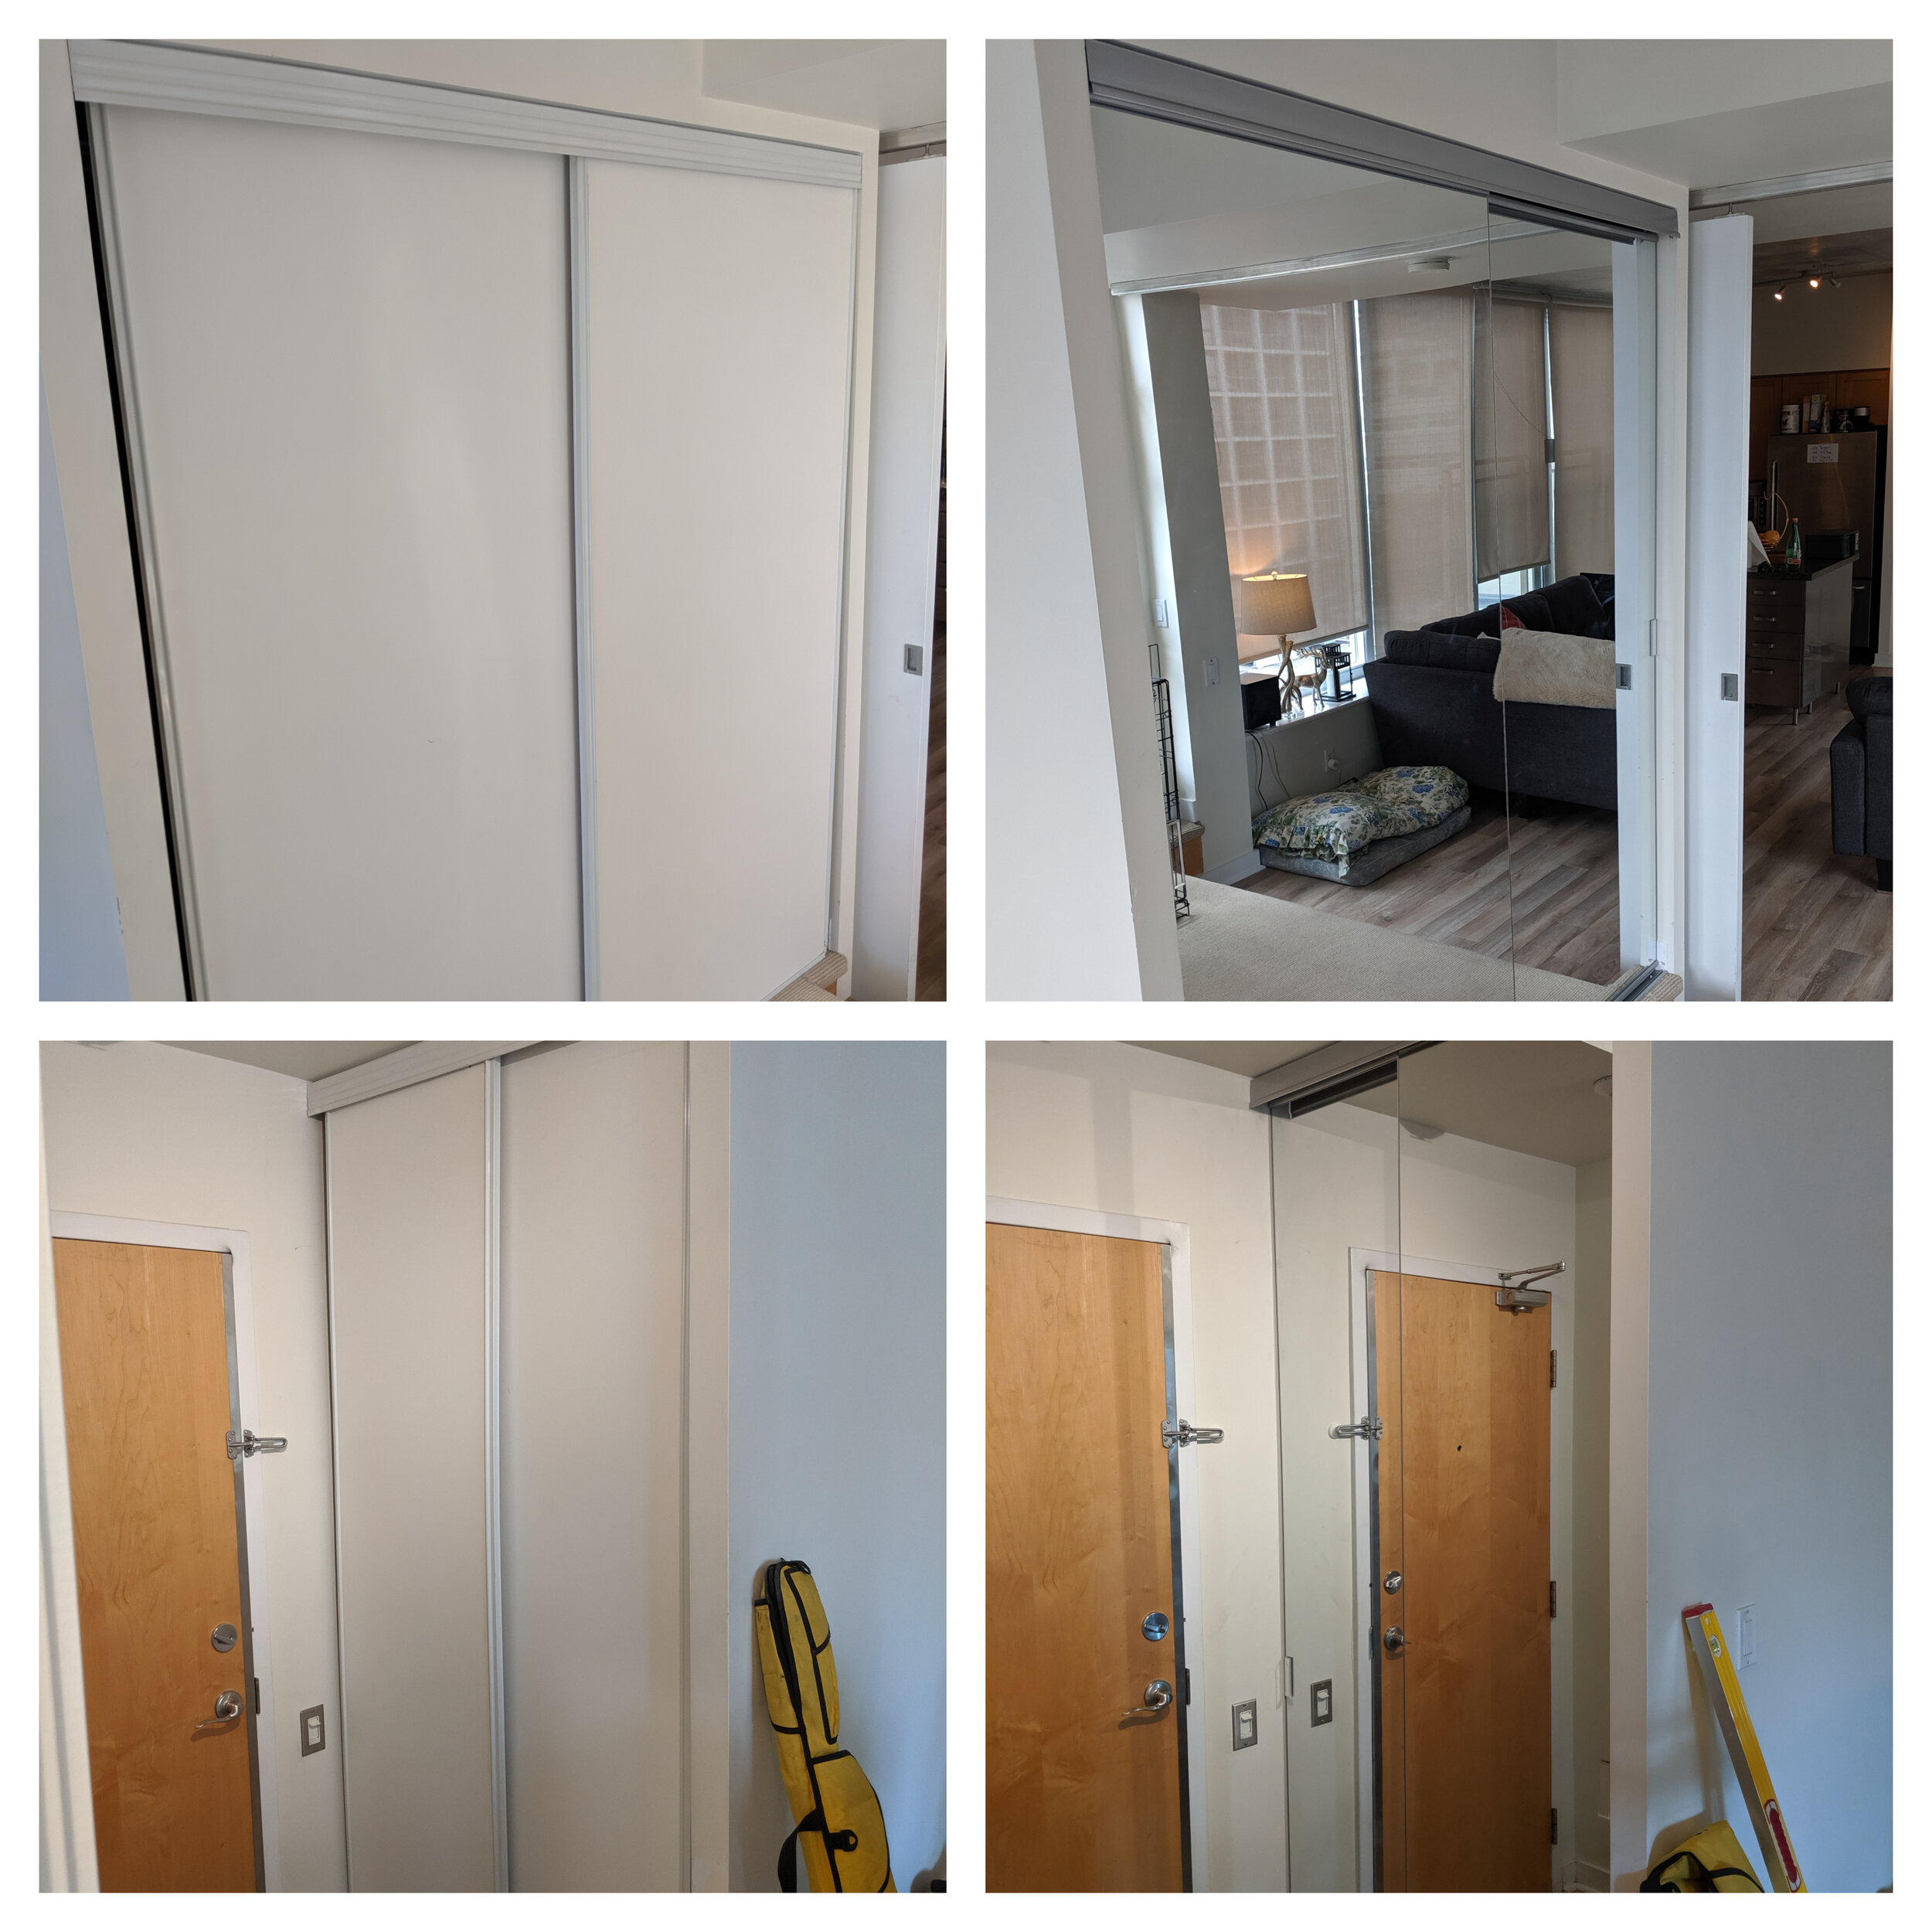 Sliding Closet Doors Installation And, How To Put Mirrors On Sliding Closet Doors